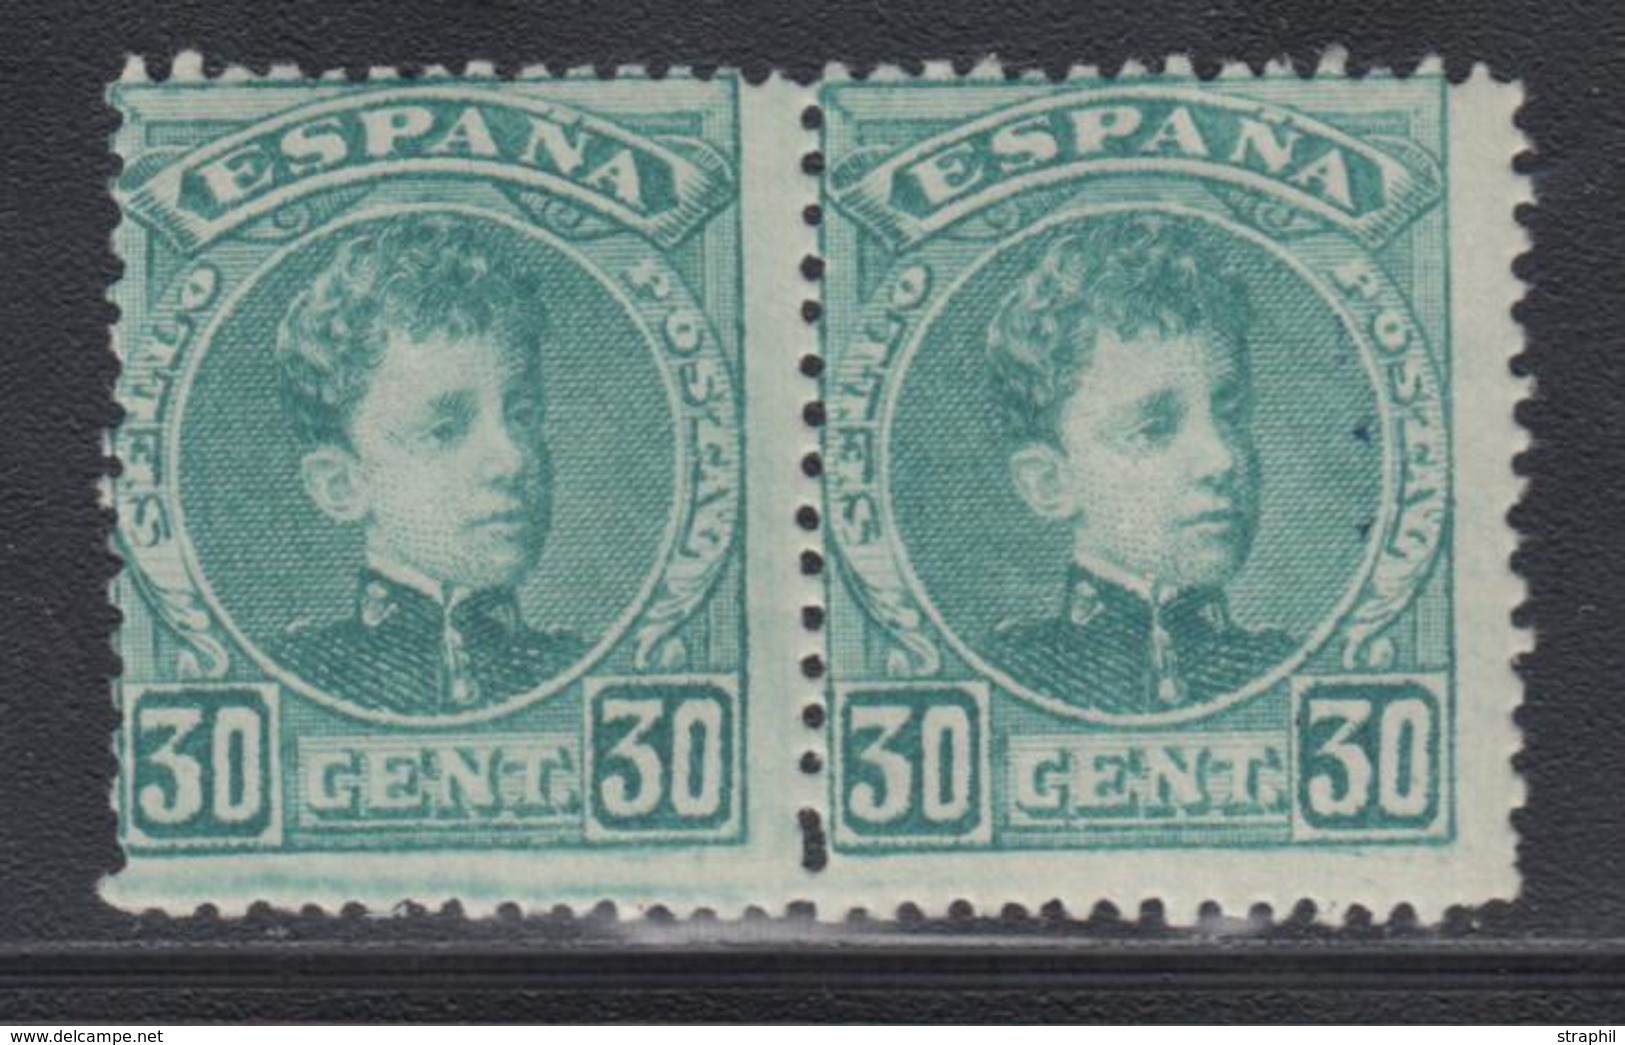 ** N°219 - Paire - 30c Bleu Vert - TB - Unused Stamps